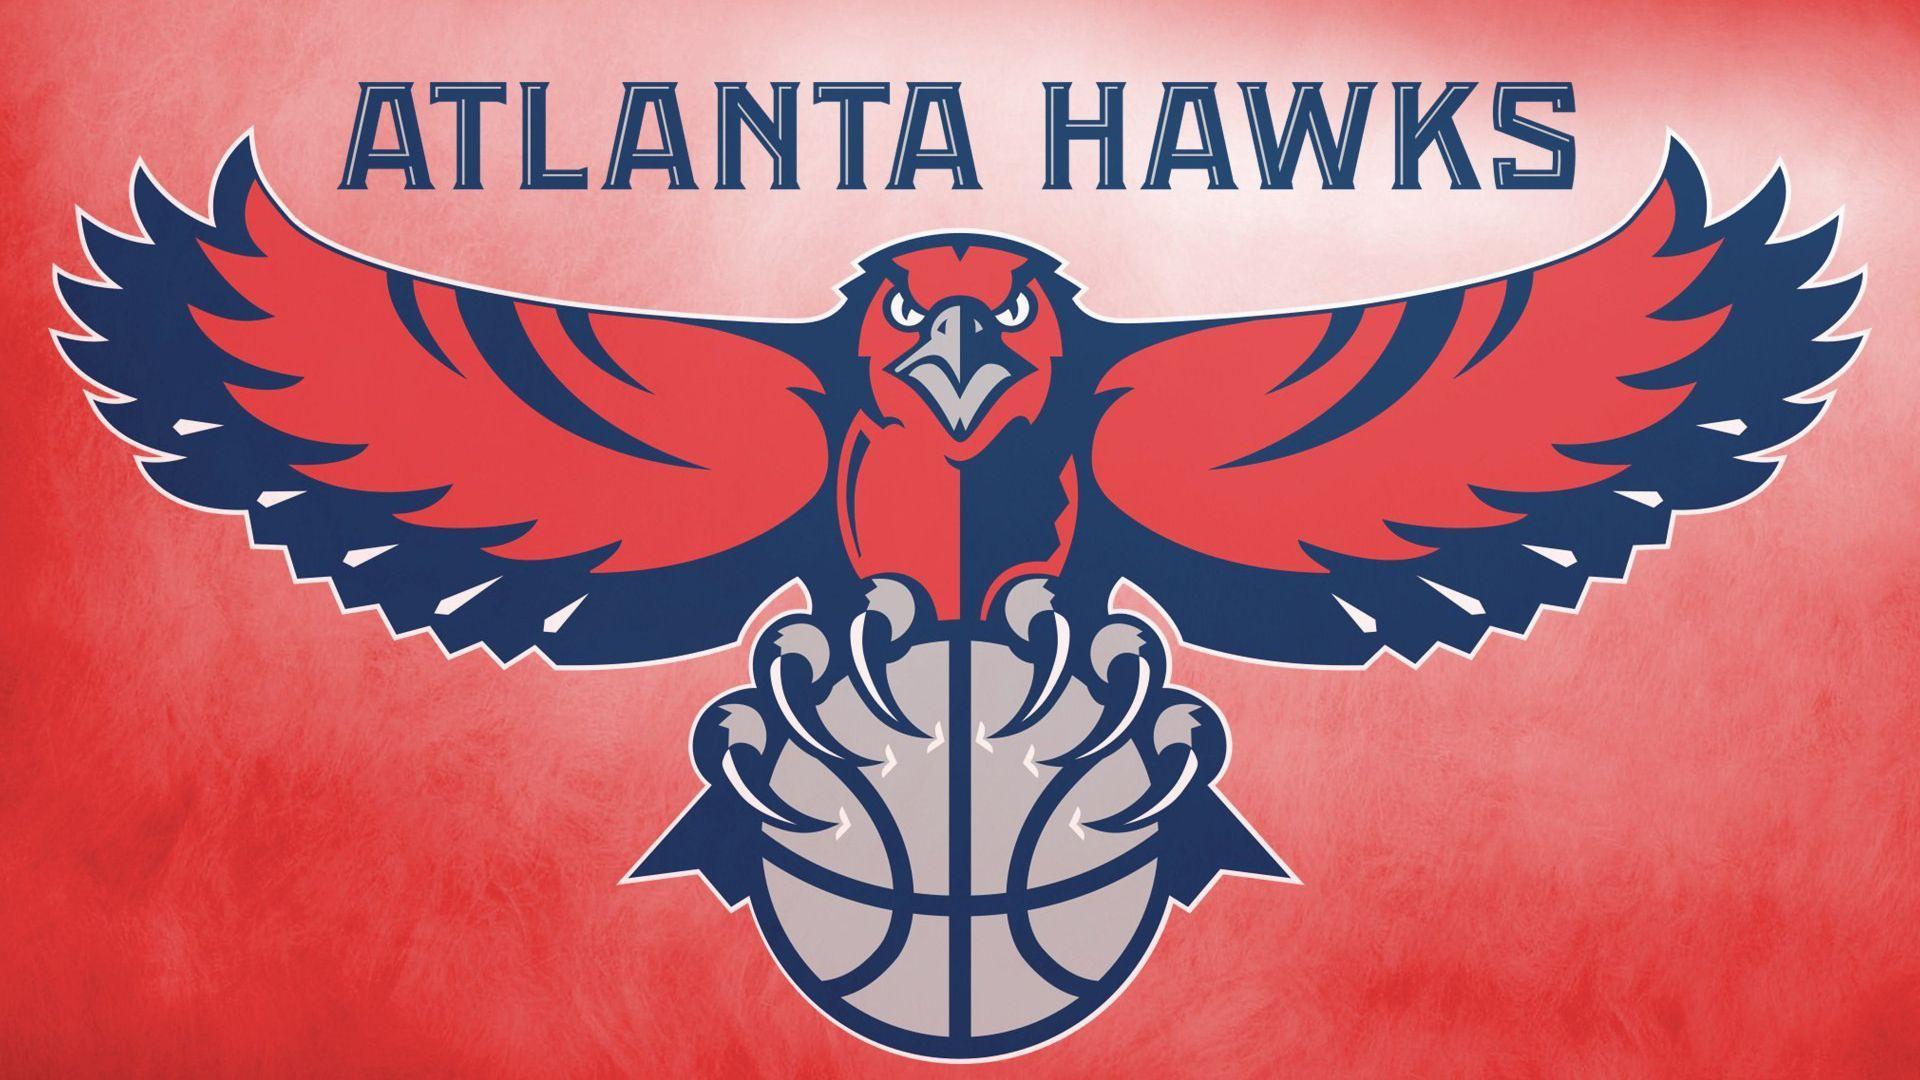 Atlanta Hawks Wallpaper Image Photo Picture Background